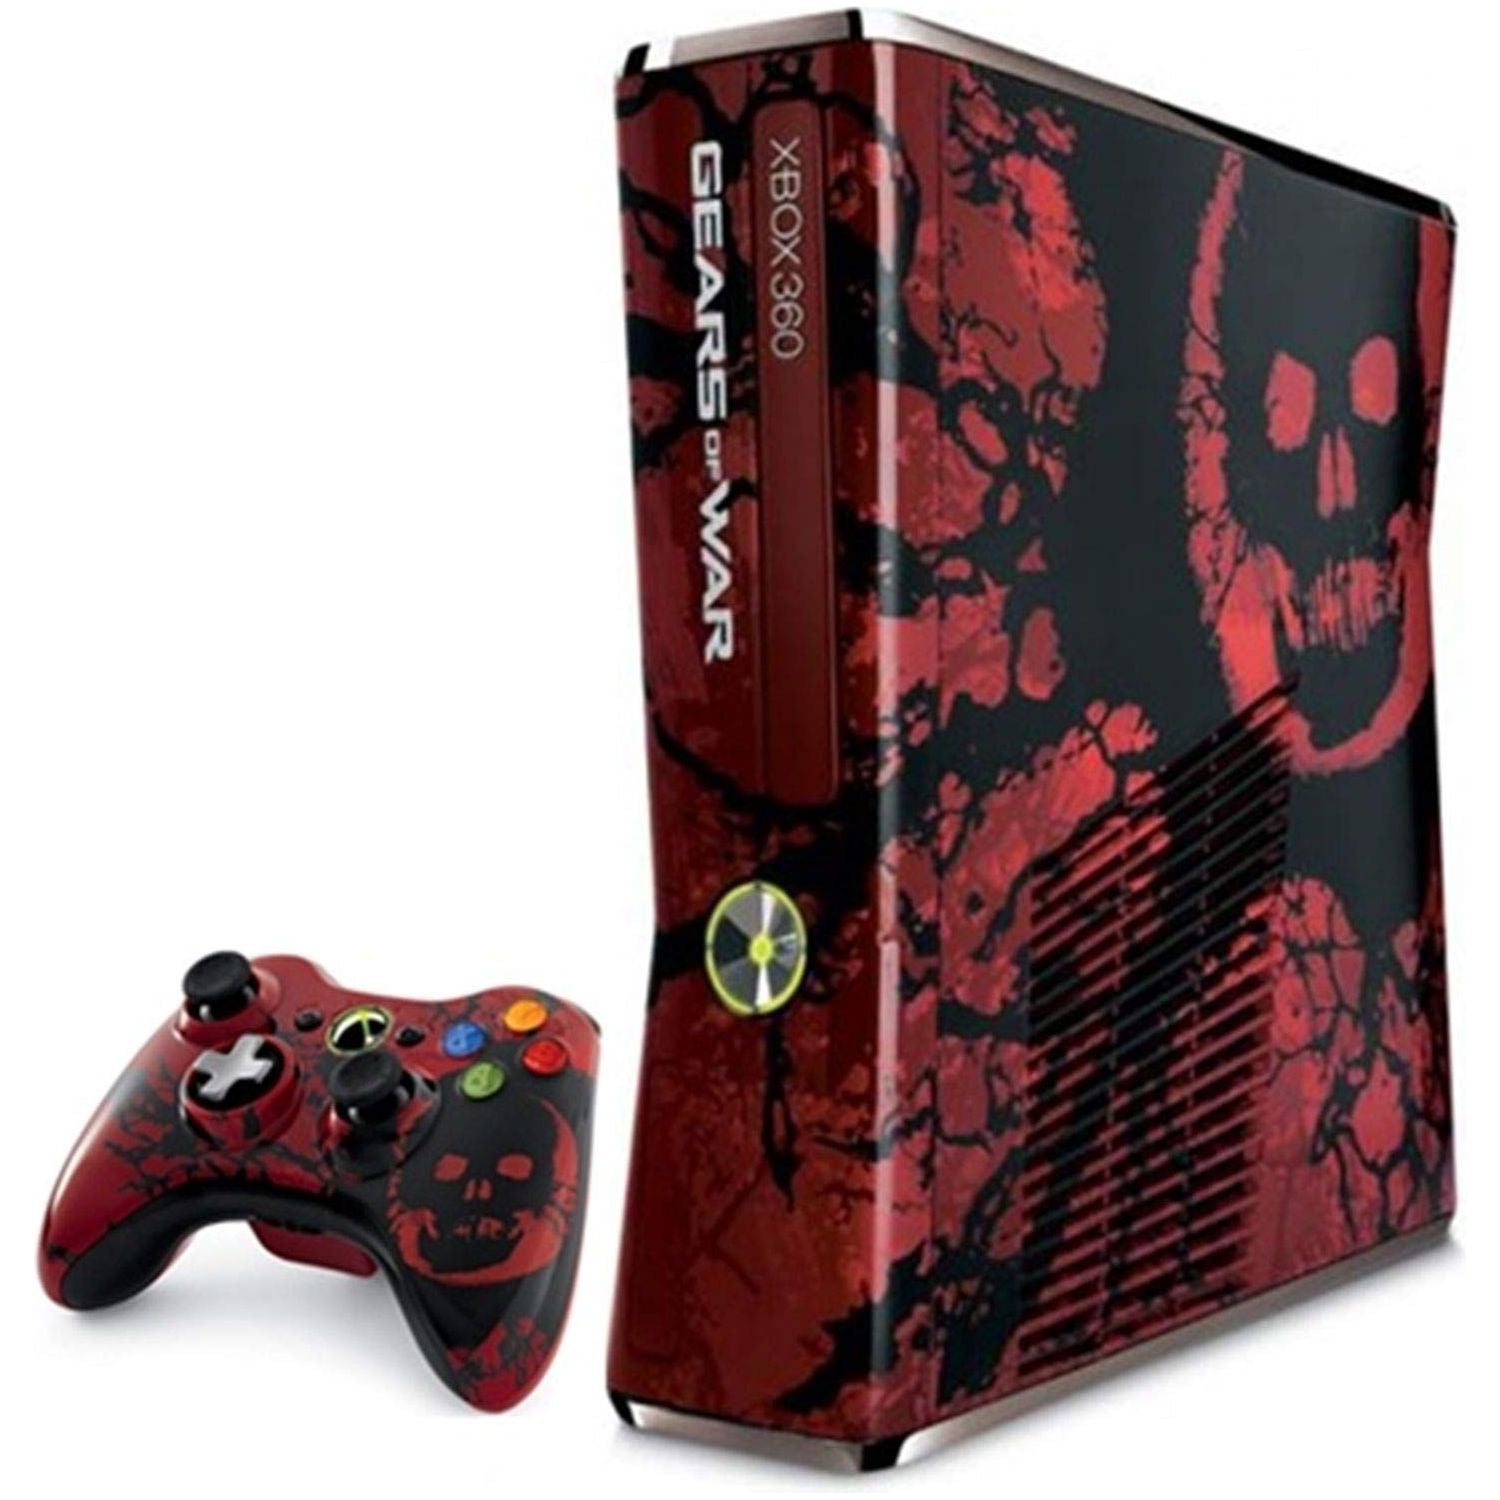 Système XBOX 360 Slim Gears of War 3 Edition avec manette correspondante